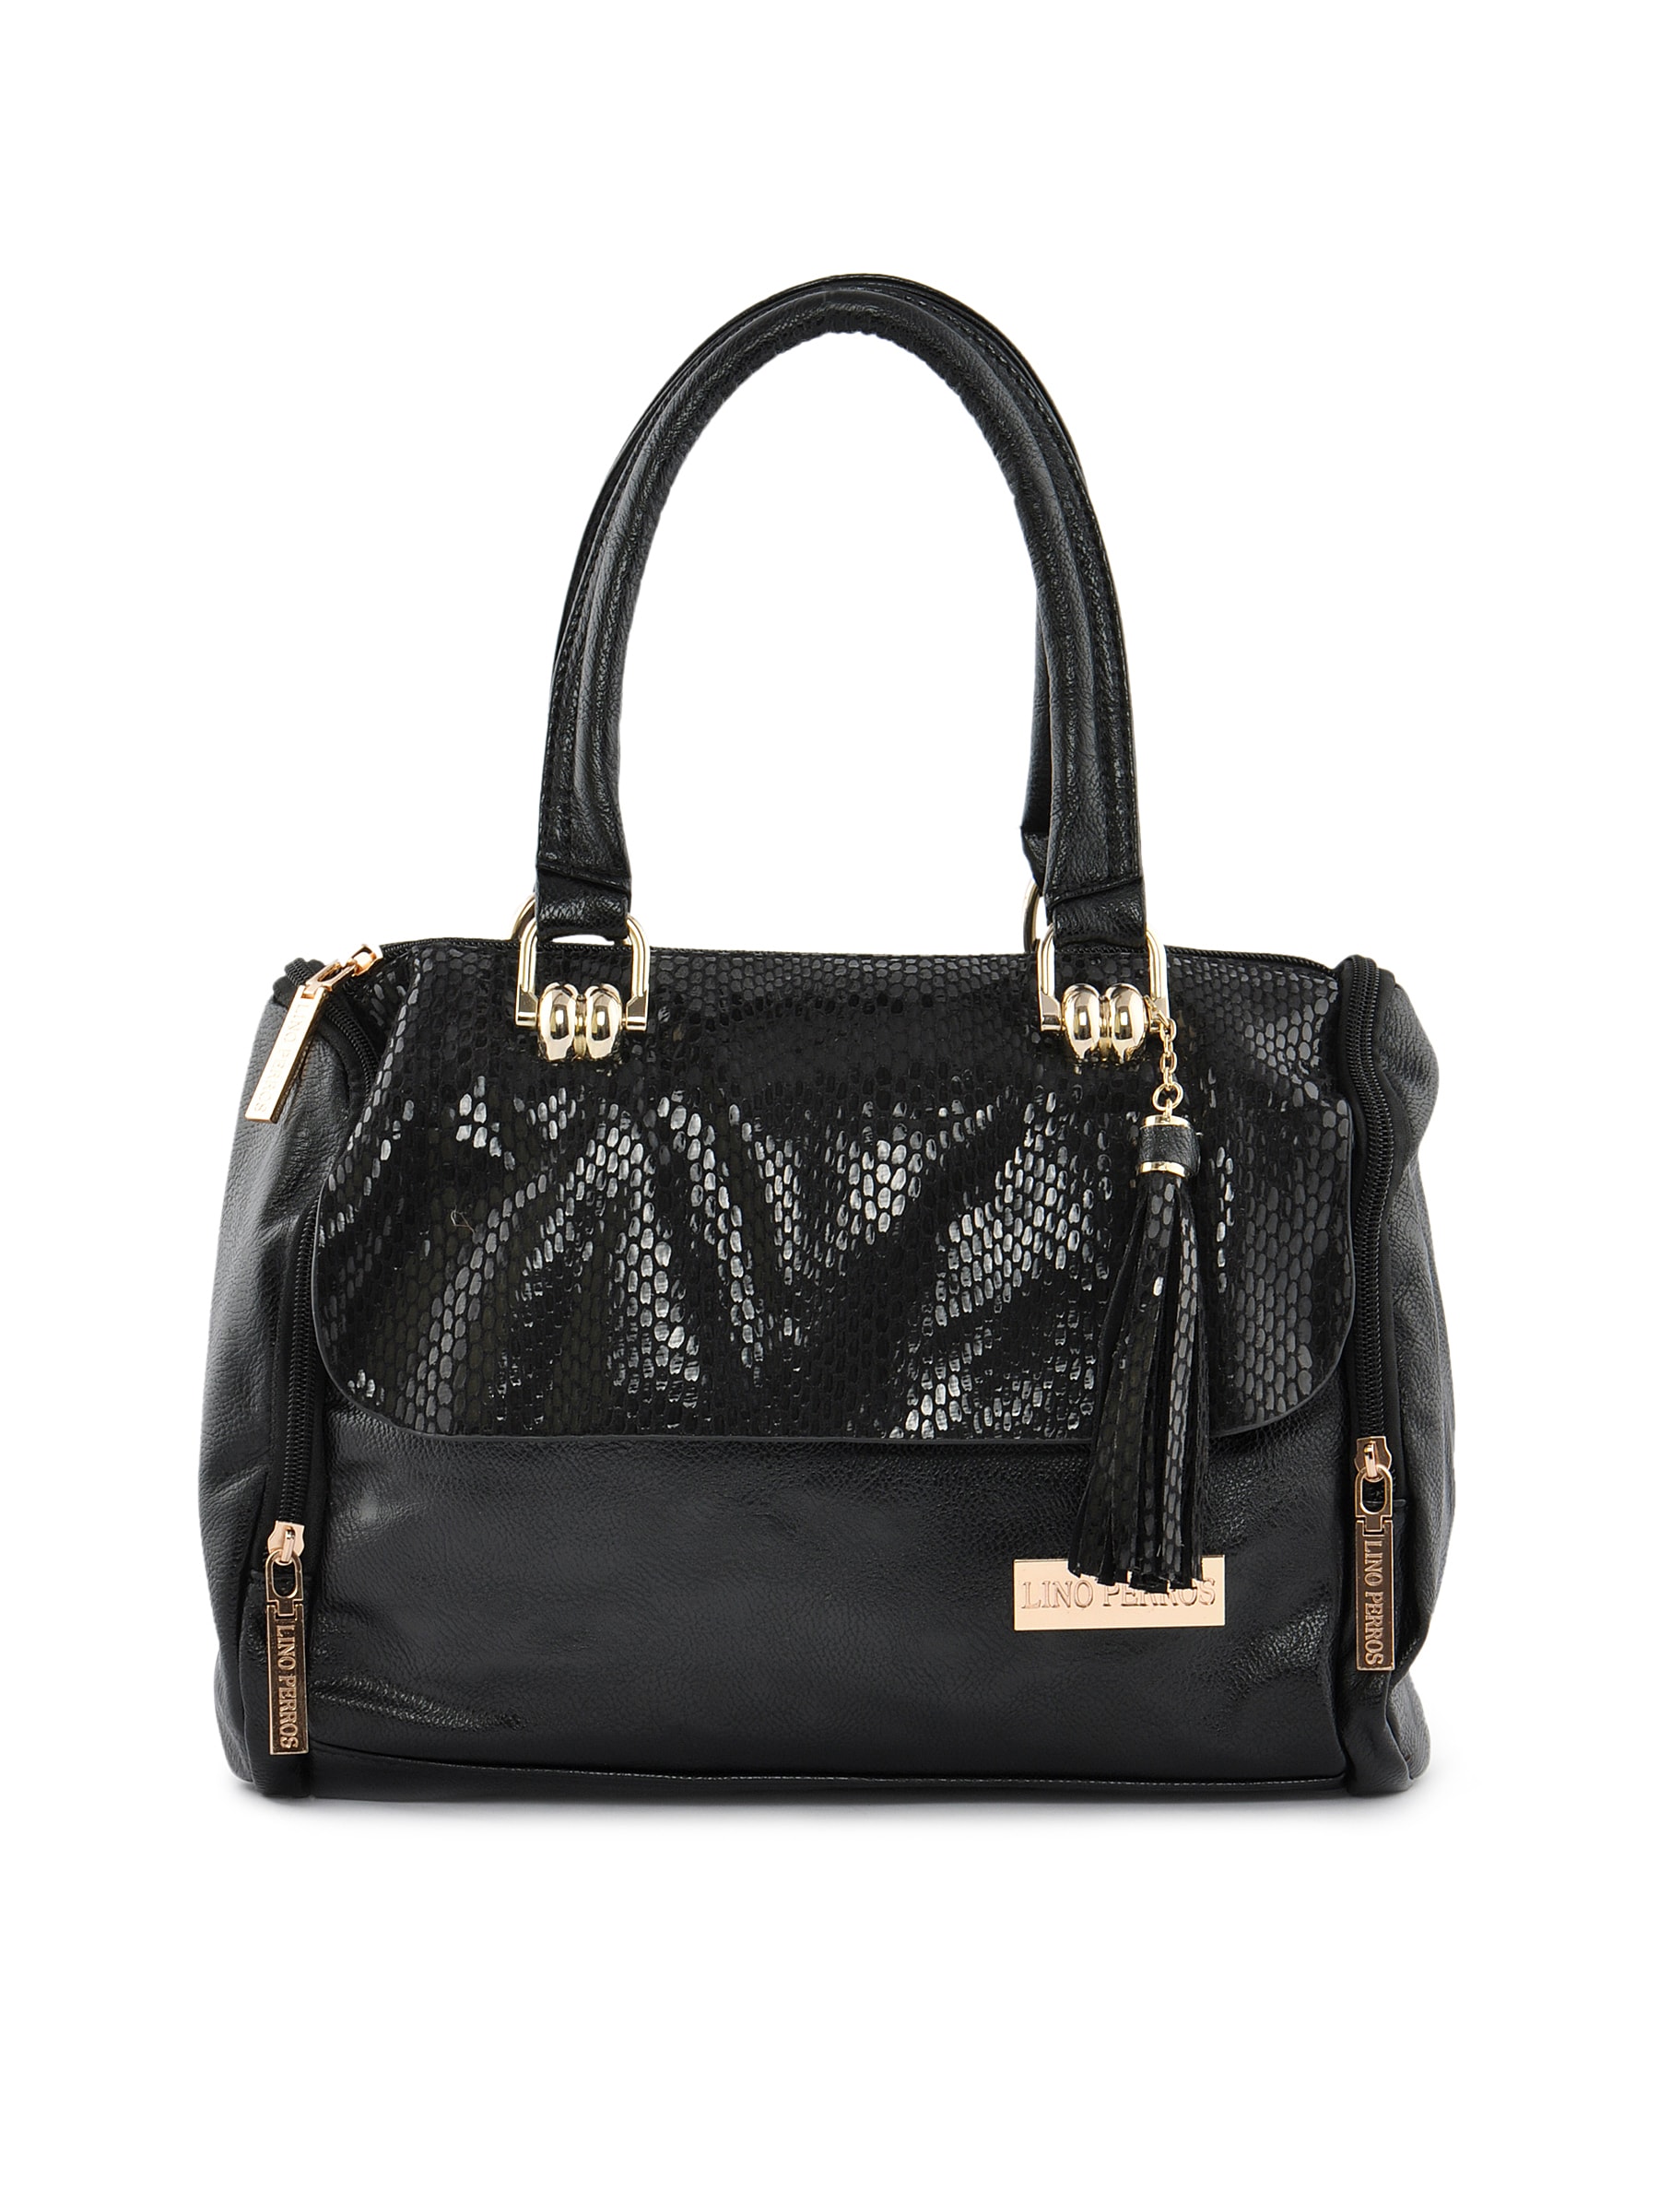 Lino Perros Women Classic Black  Handbag